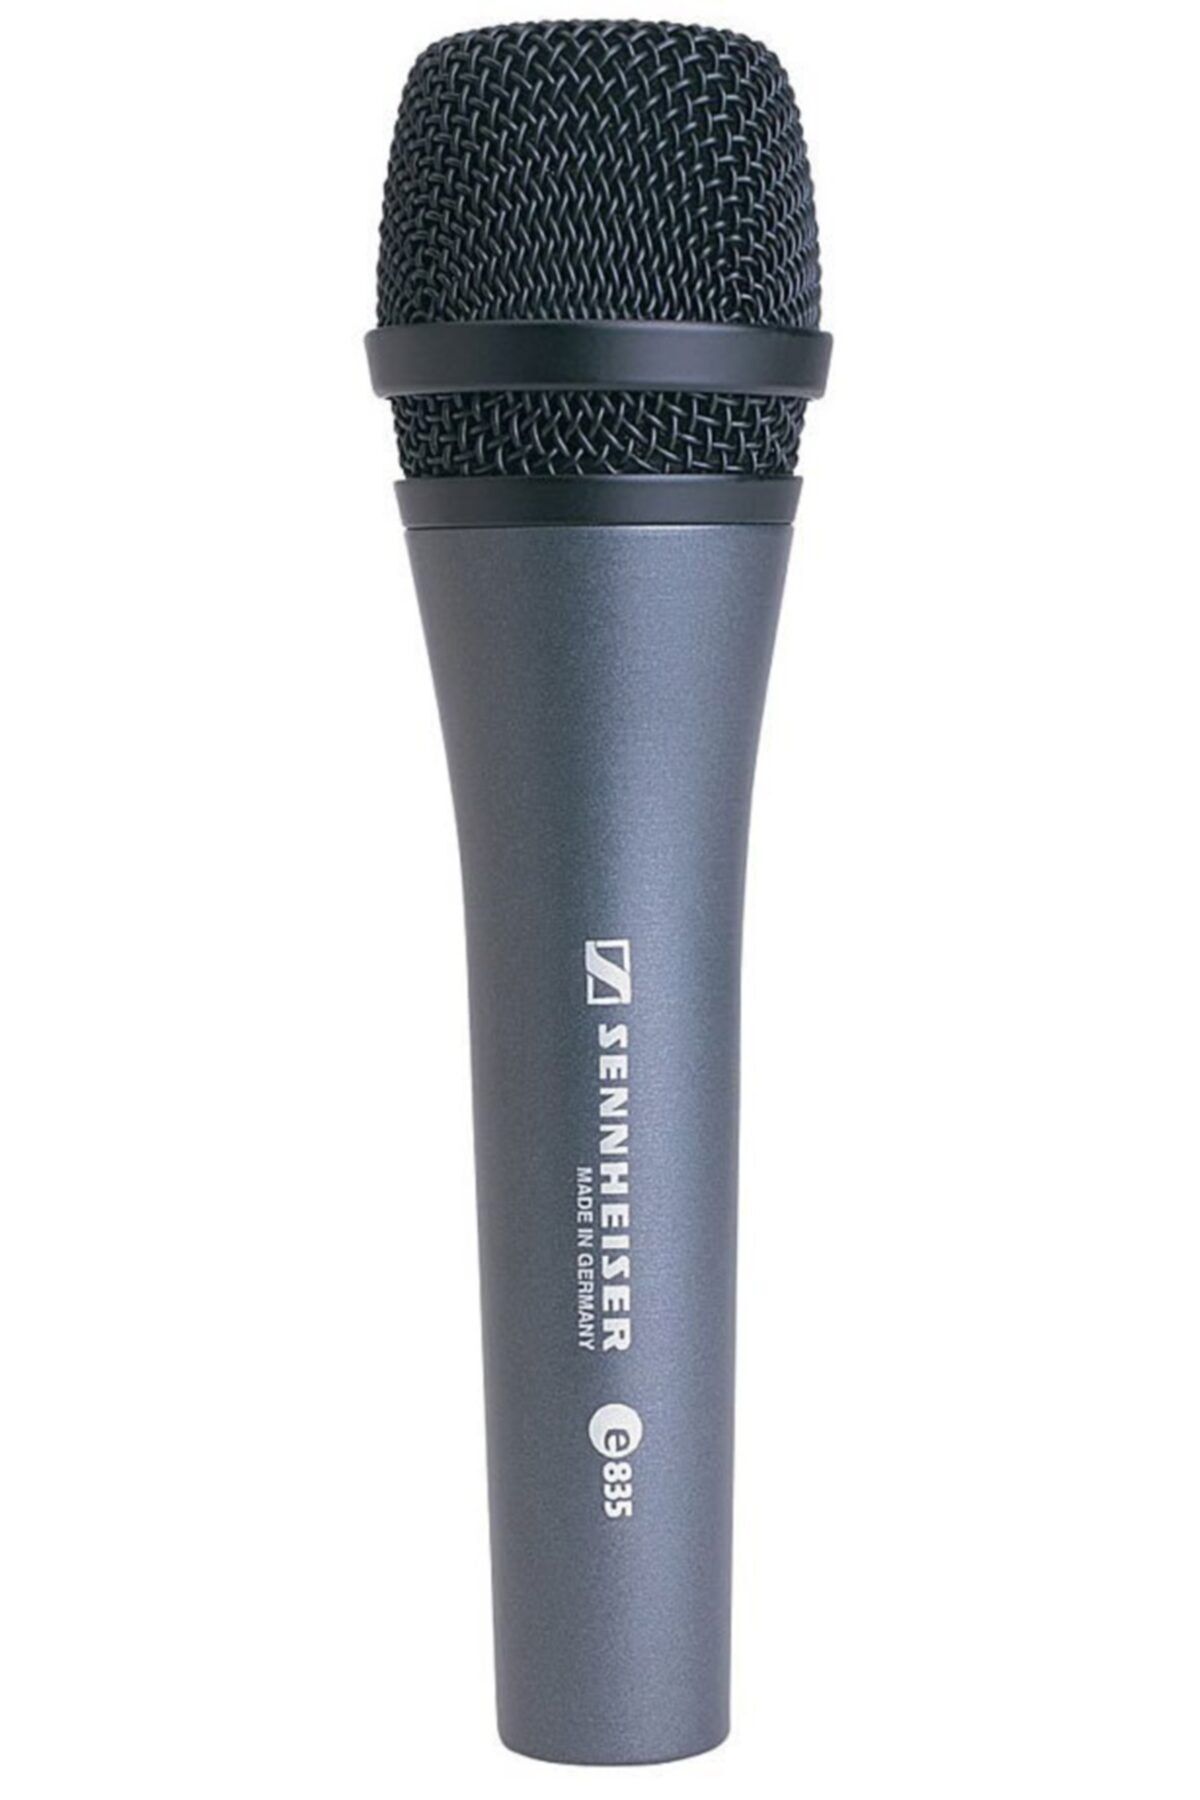 Sennheiser E 835 S Vokal Mikrofonu